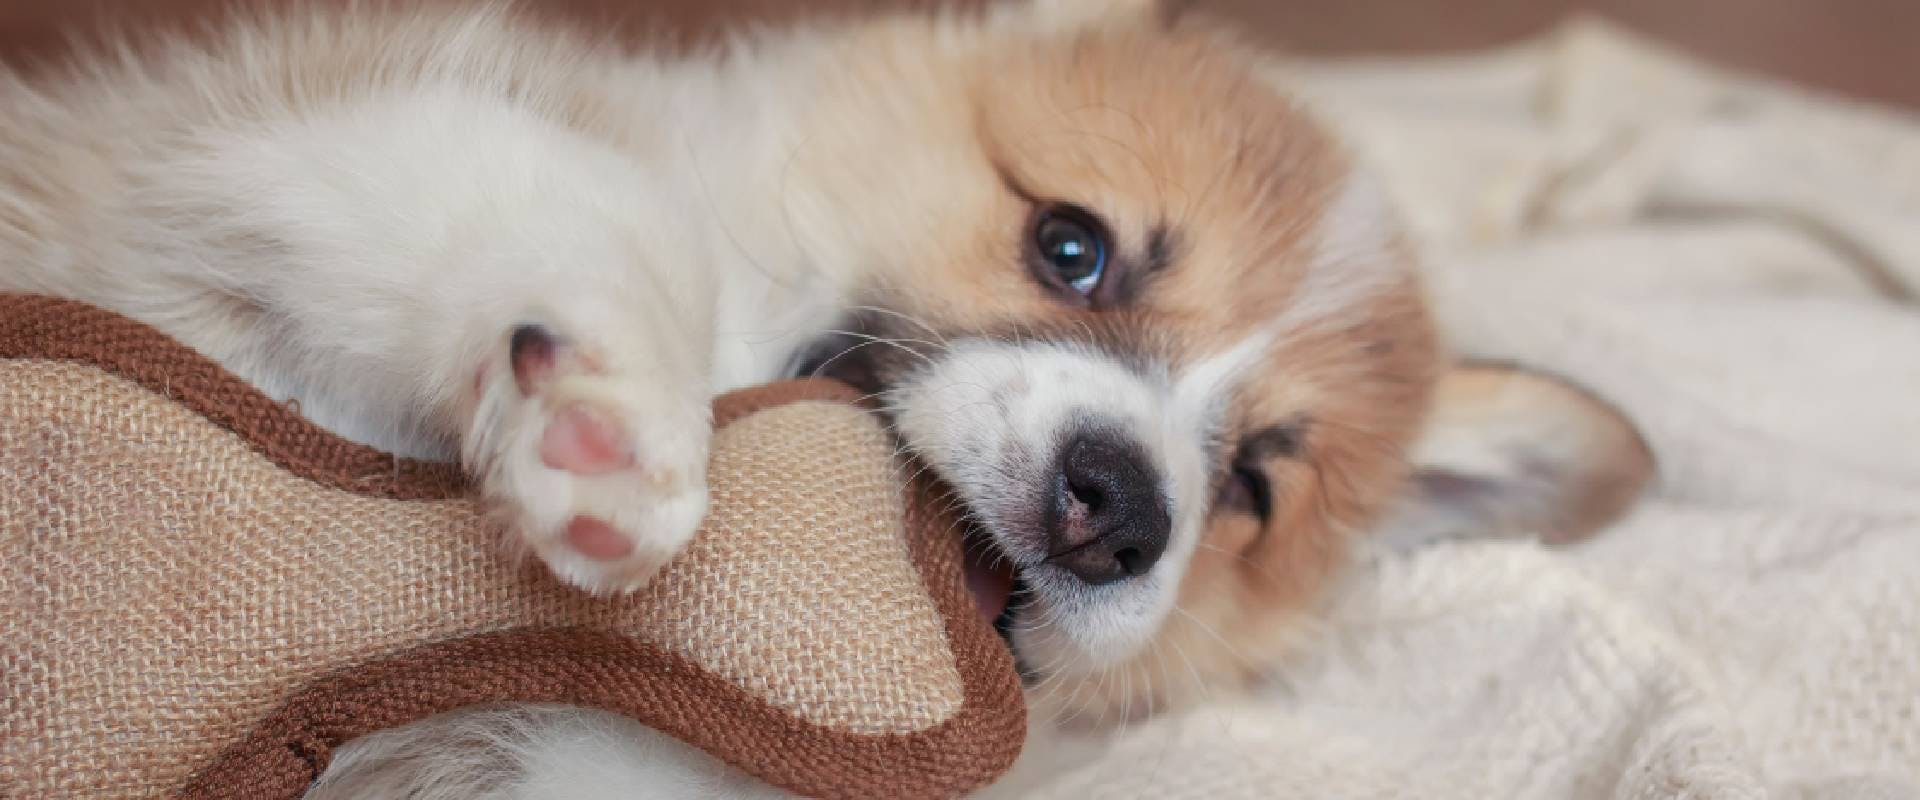 Corgi dog puppy lying and nibbling a toy